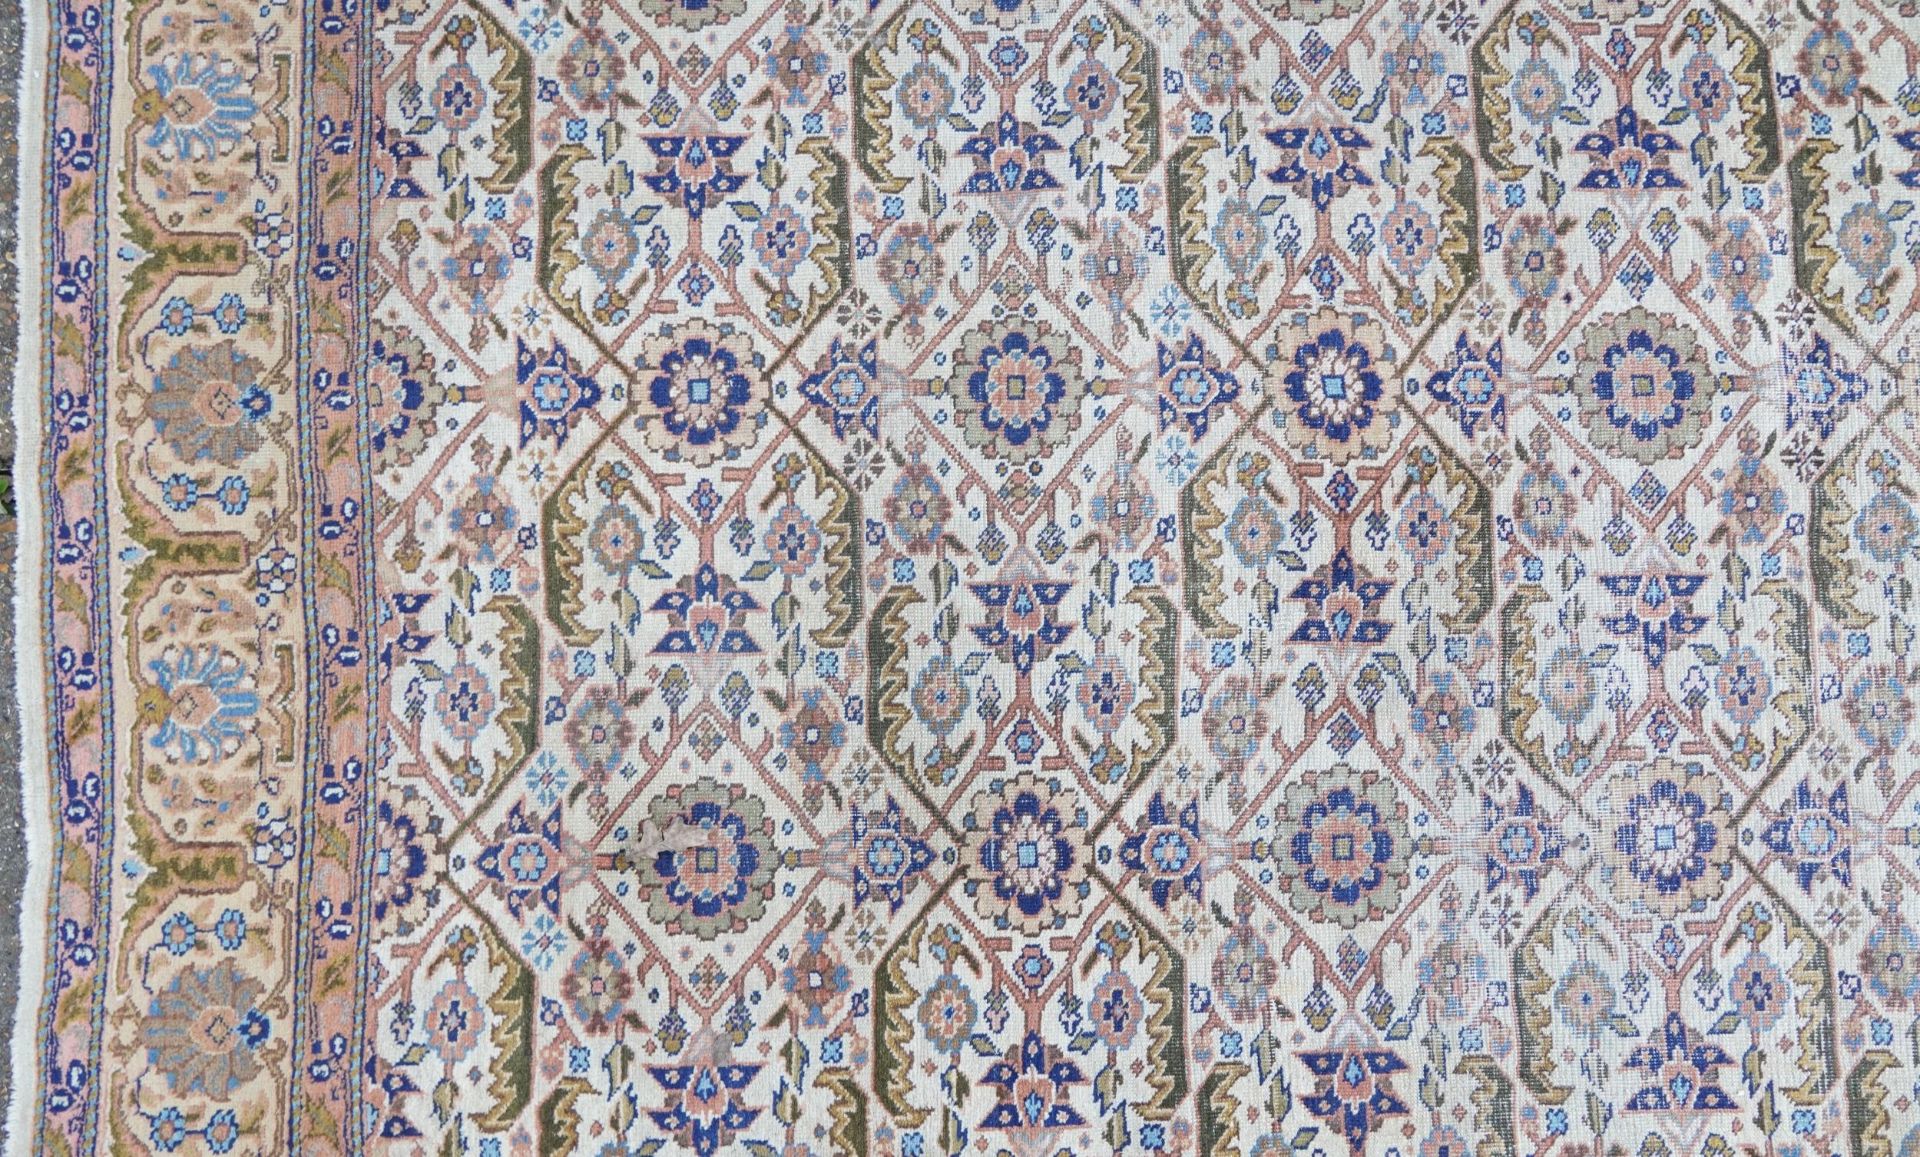 Rectangular Persian rug having an allover floral design within corresponding borders, 345cm x 255cm - Image 5 of 11